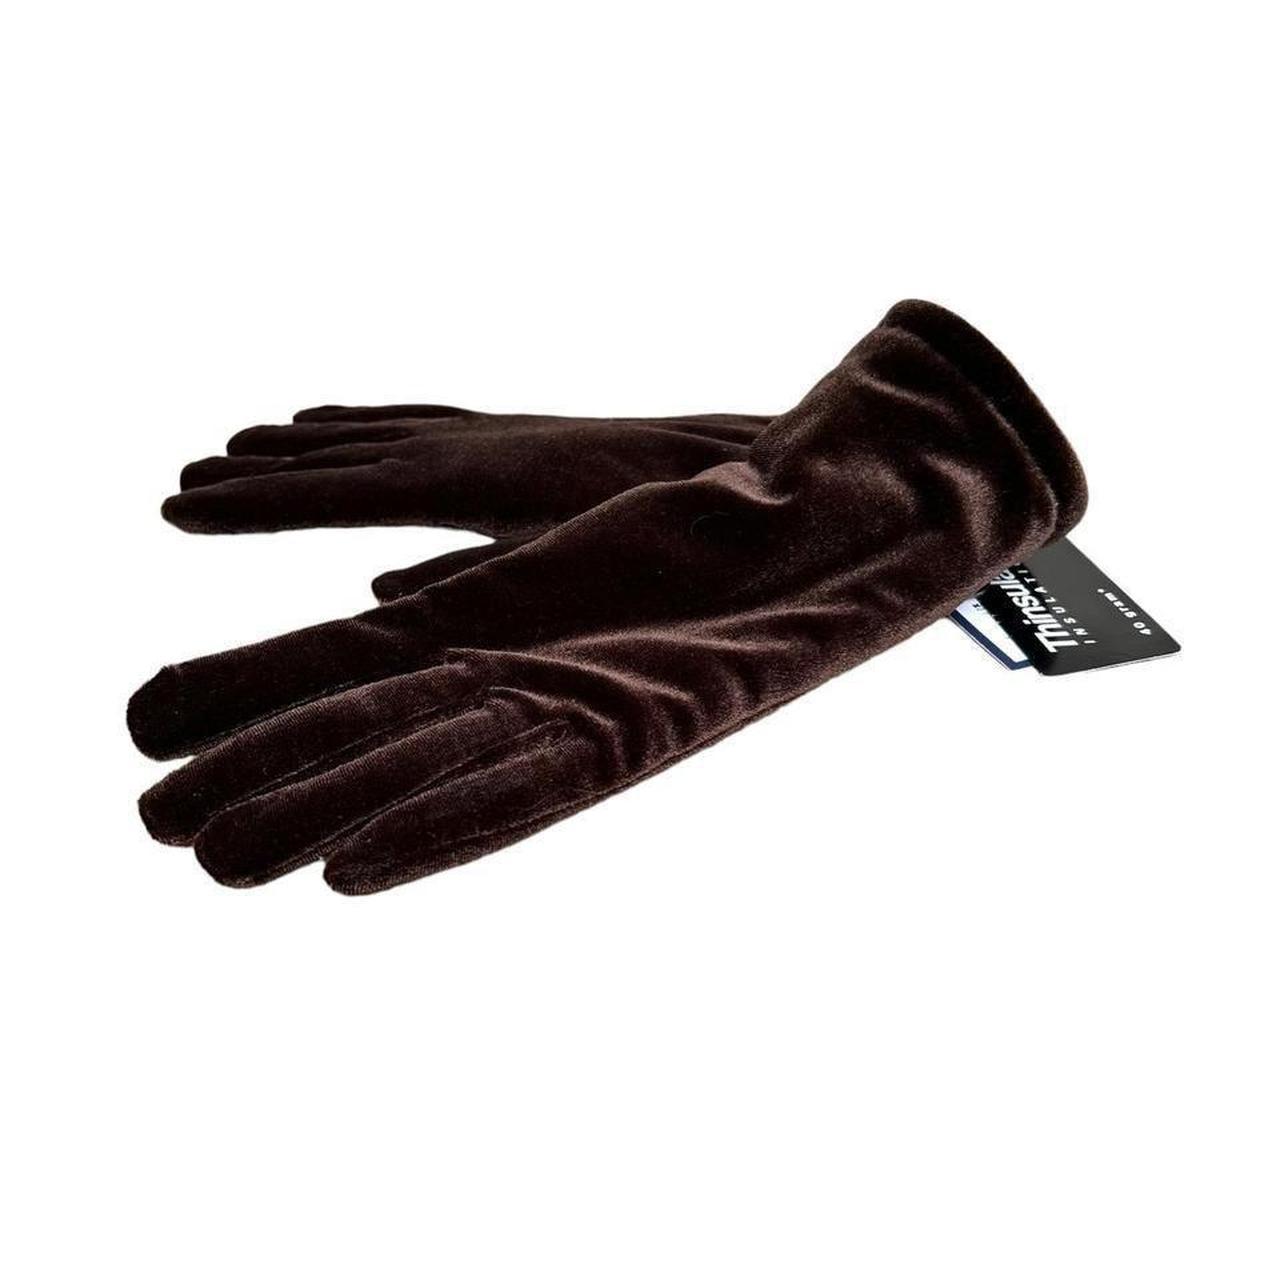 Croft & Barrow Women's Brown Gloves (2)